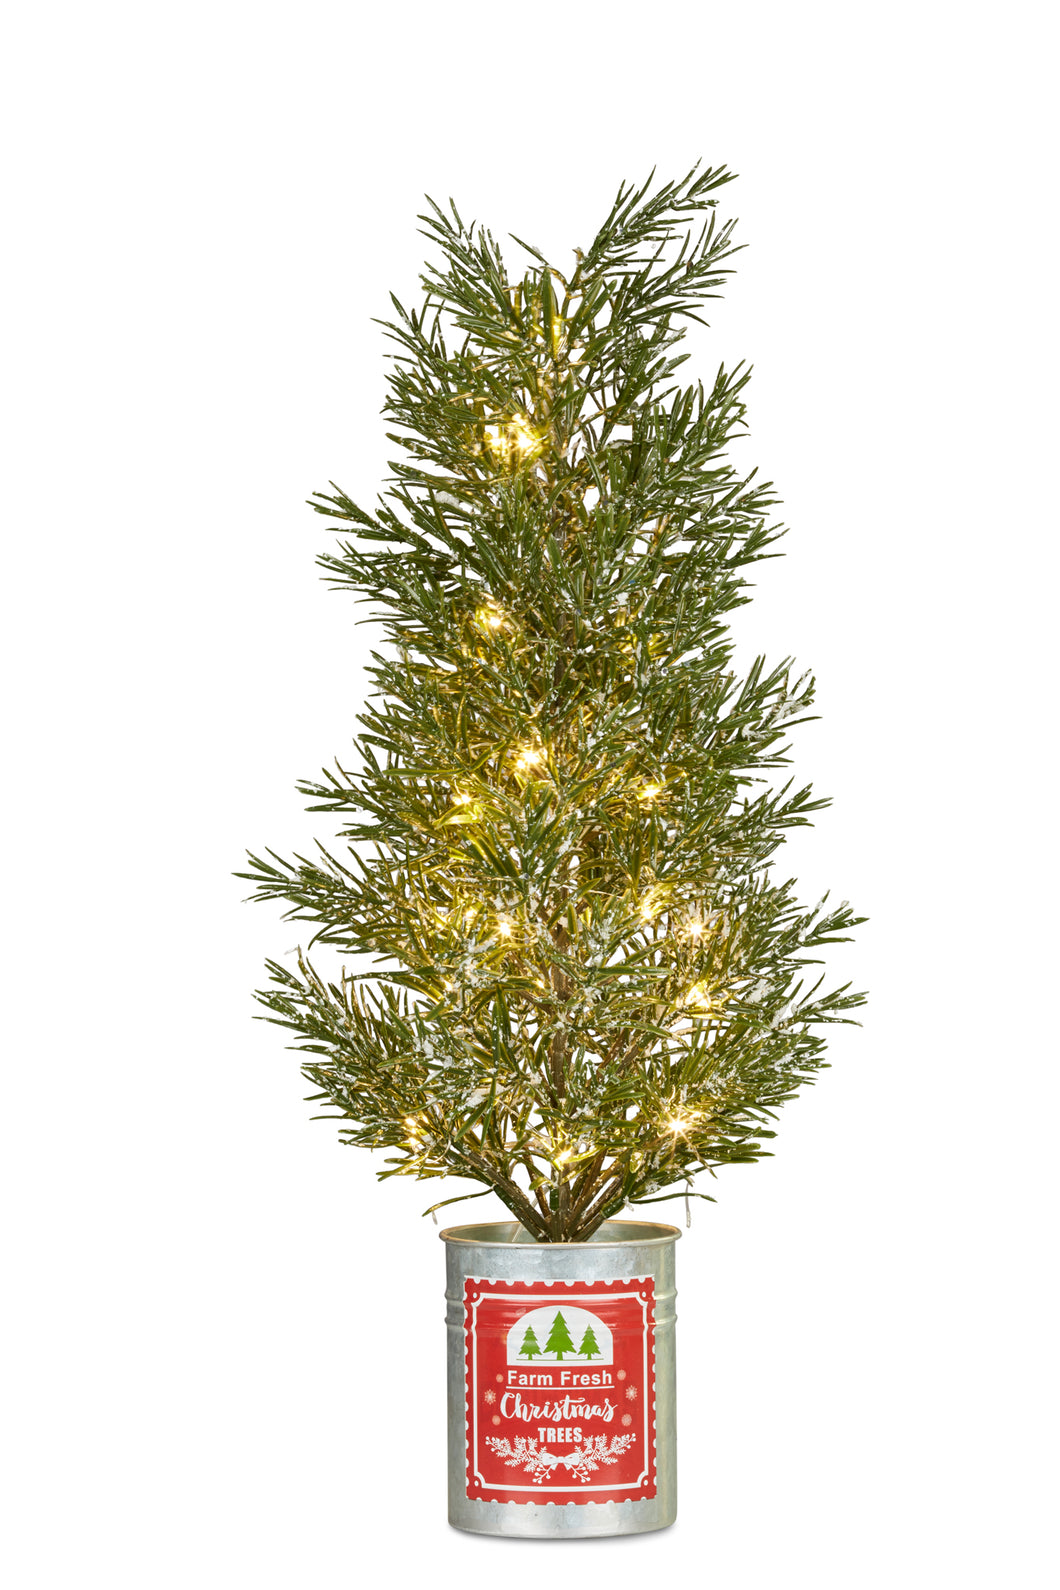 Table Top Christmas Tree with Lights and Rustic Tin Pot